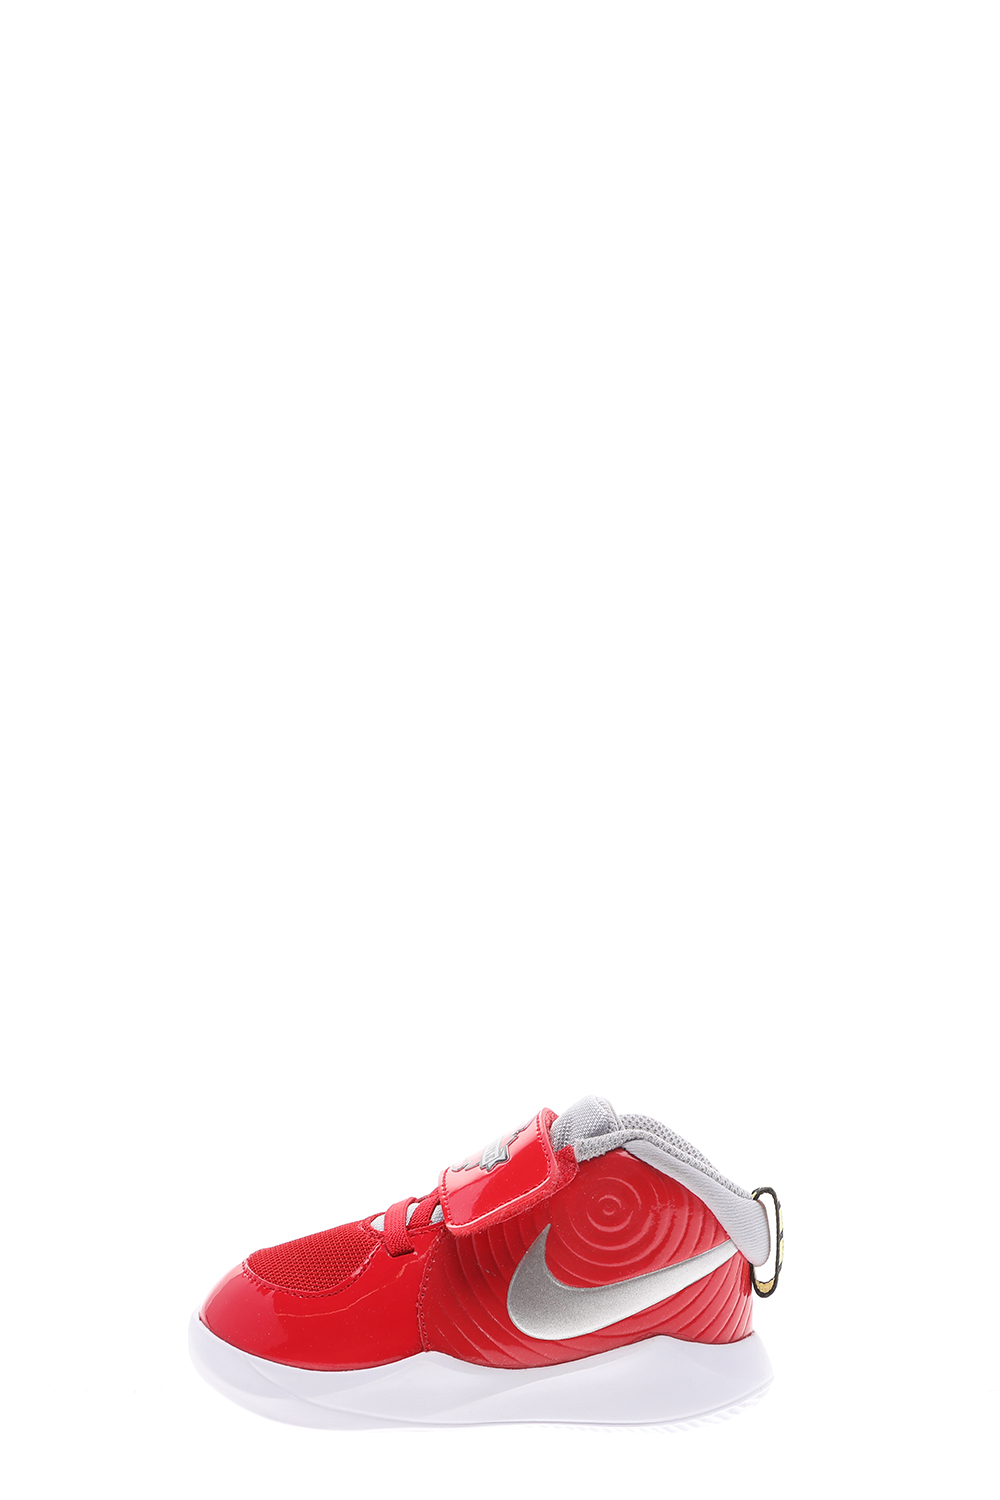 NIKE - Βρεφικά αθλητικά παπούτσια NIKE TEAM HUSTLE D 9 (TD) AUTO κόκκινα Παιδικά/Baby/Παπούτσια/Αθλητικά